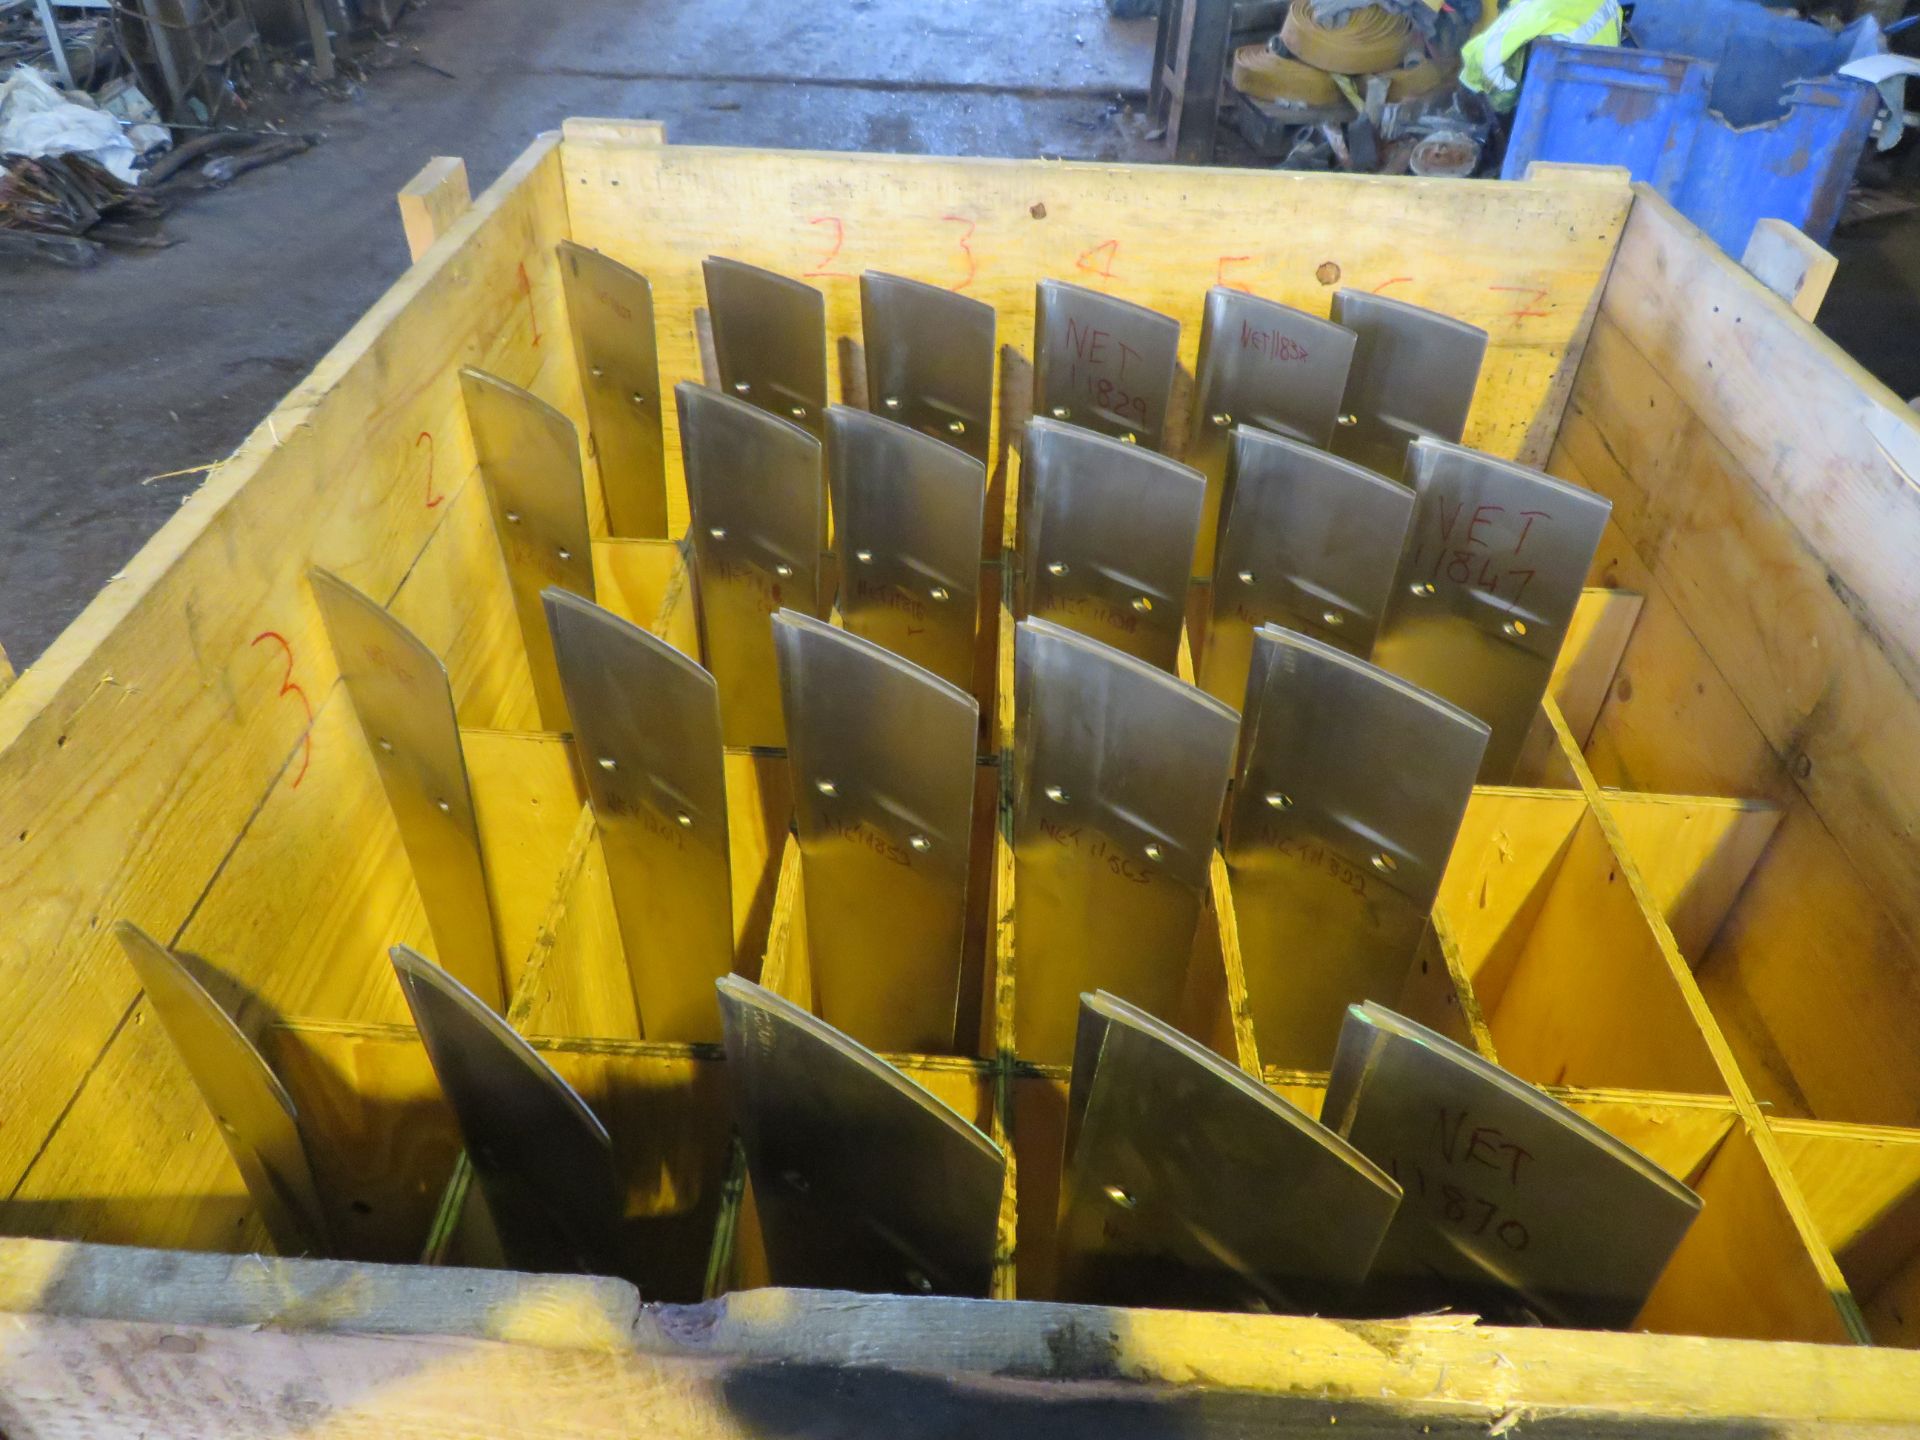 Crate to contain 22 Alstom Steam Turbine Blades